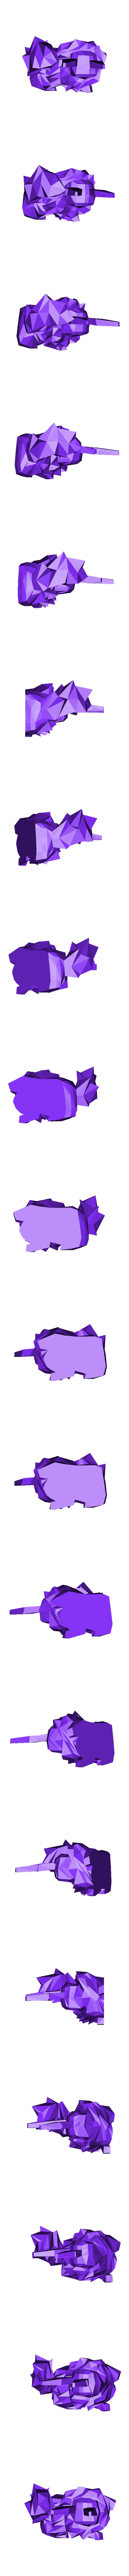 Low Poly Jolteon | Pokemon 3D Model 3d model